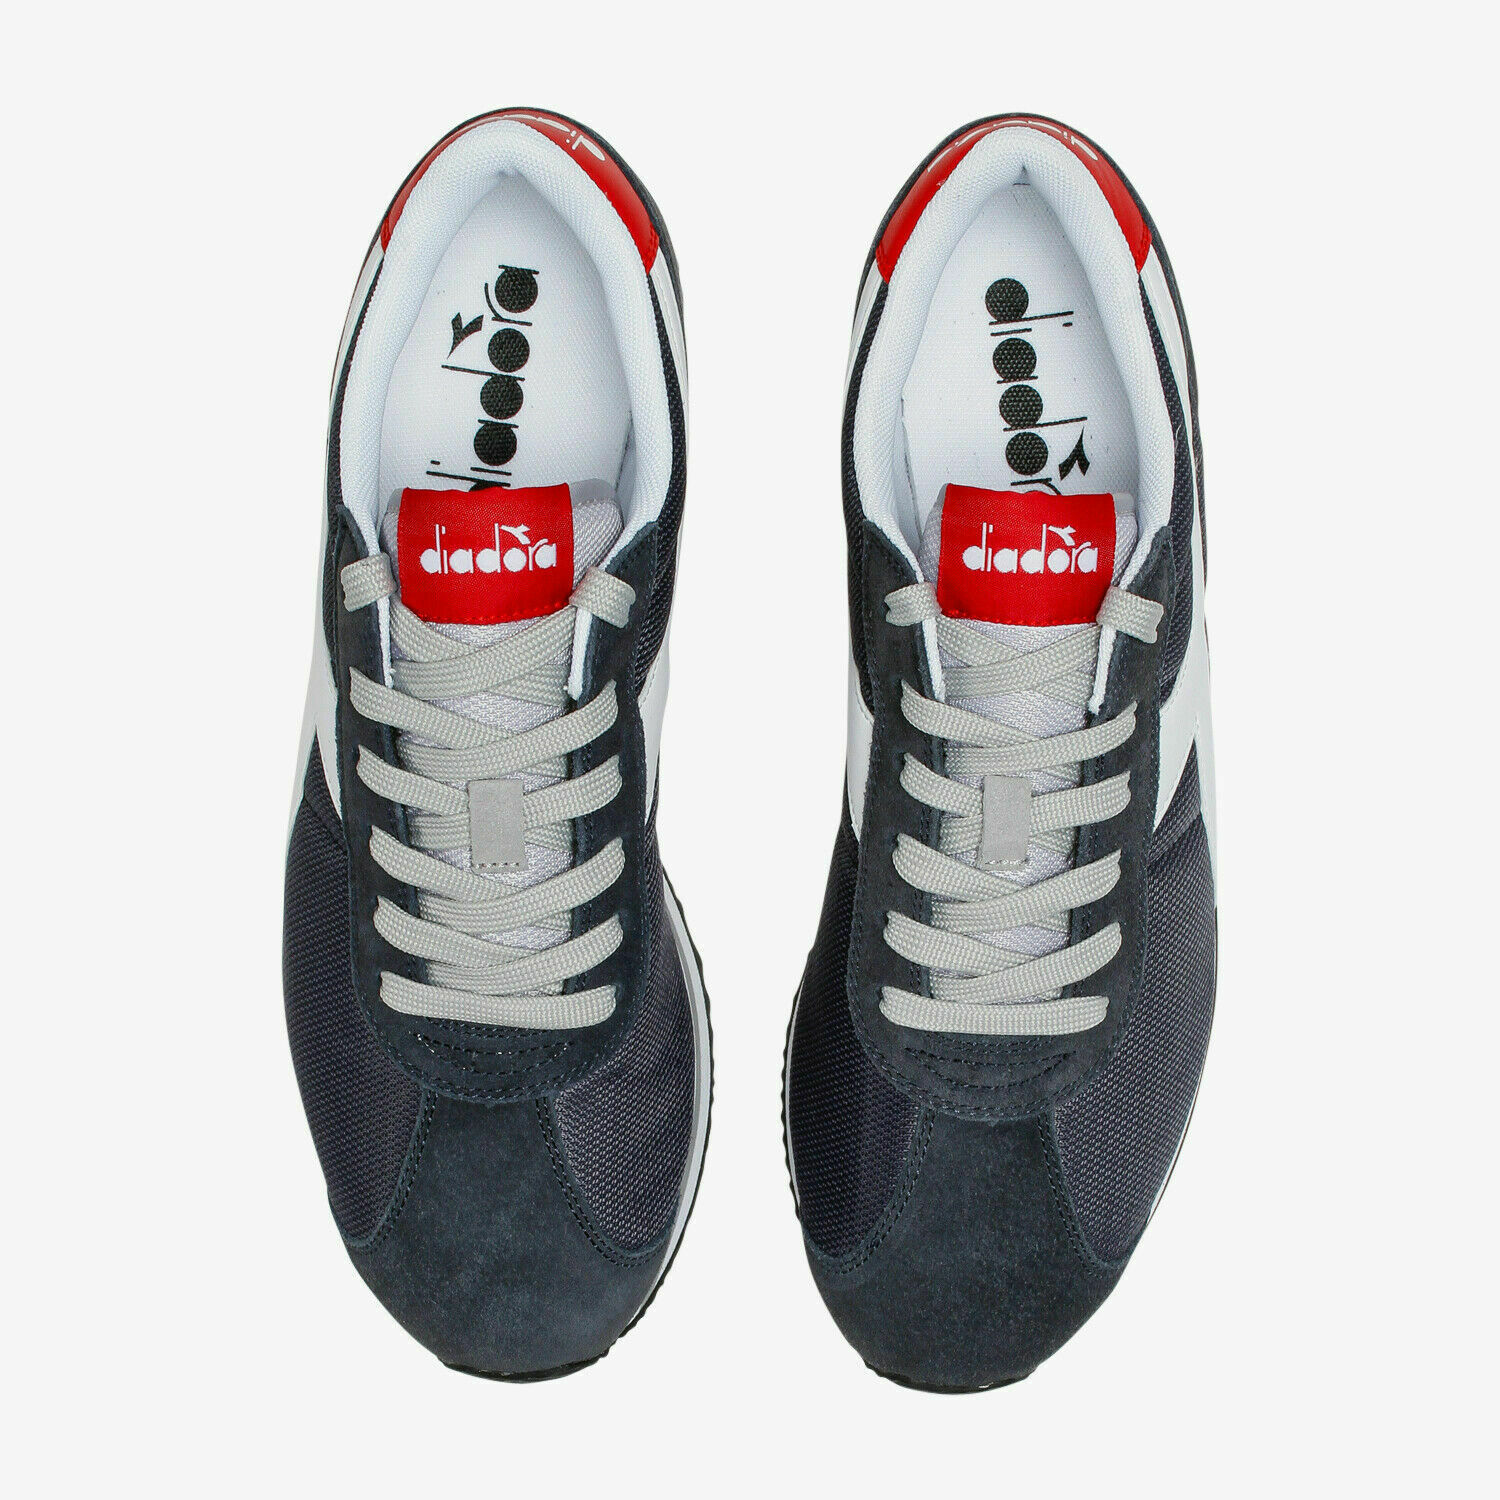 Scarpe Uomo DIADORA Vega Sneakers Estive Sportive da Ginnastica Blu Verde  43 44 | eBay